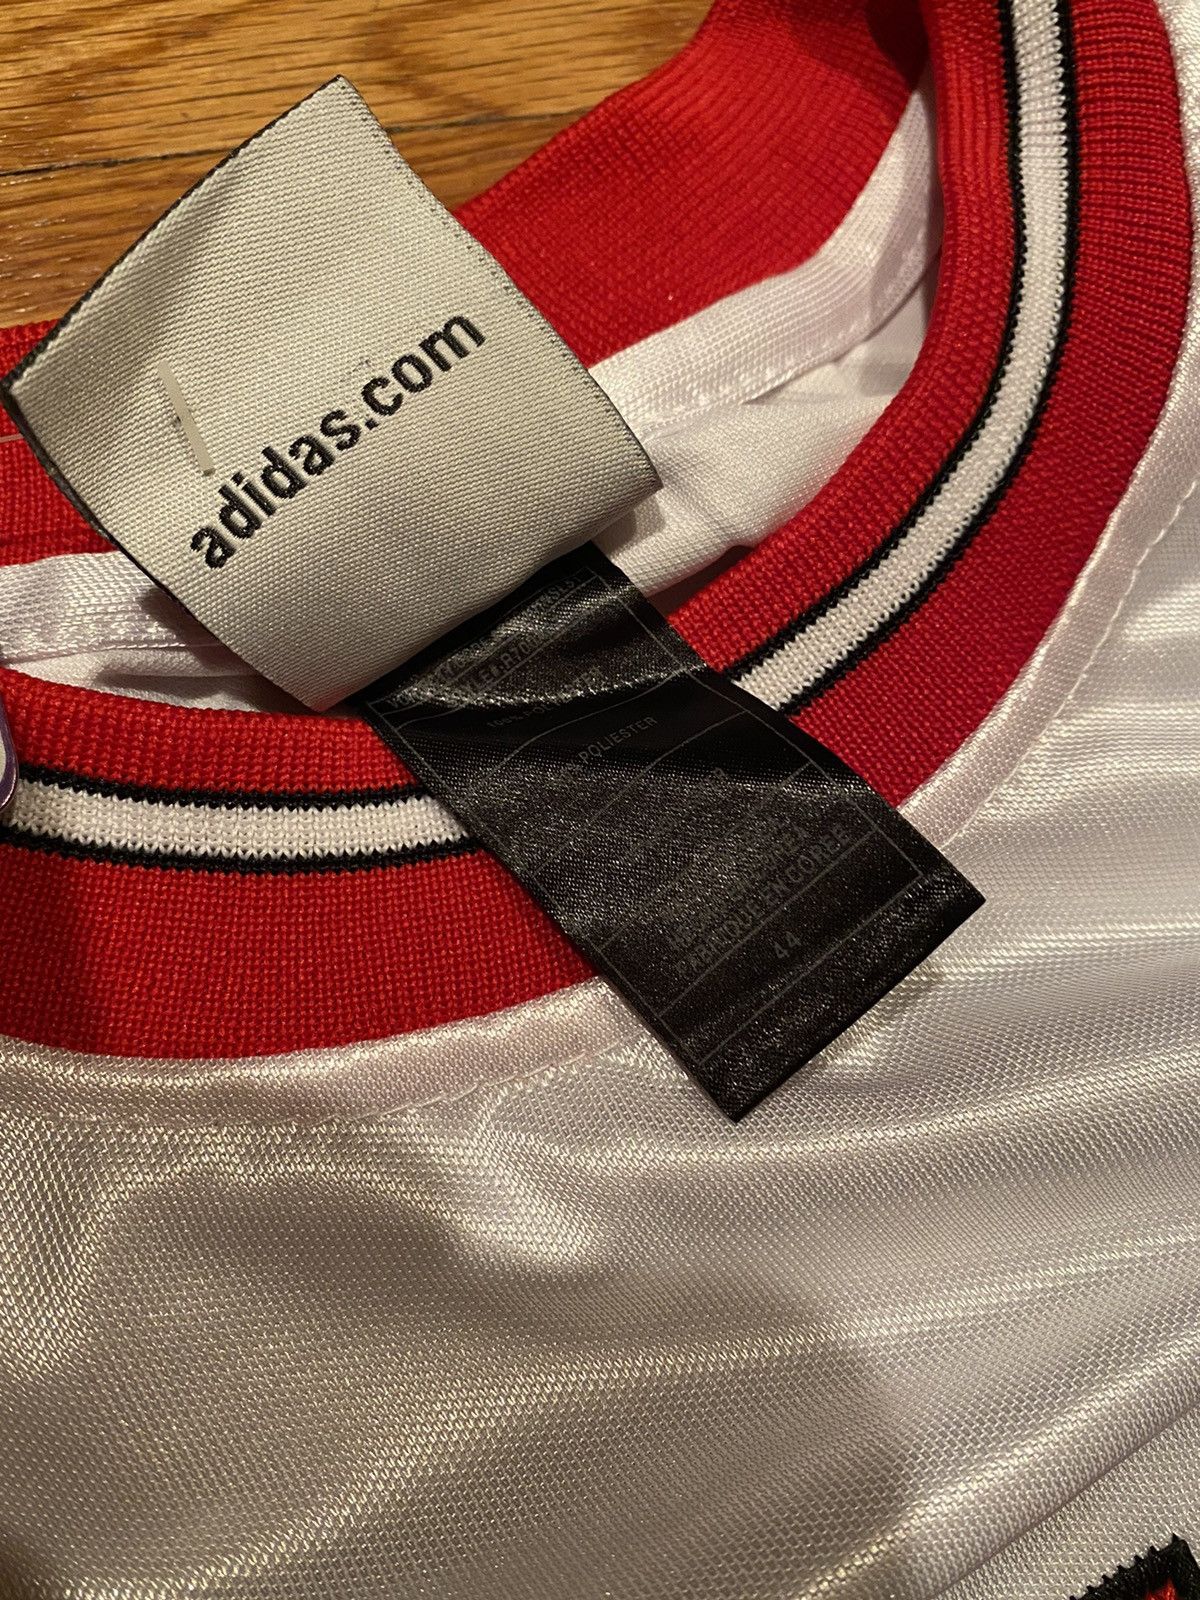 Adidas Adidas Chicago Bulls Derrick Rose Jersey Tee Size US M / EU 48-50 / 2 - 4 Thumbnail